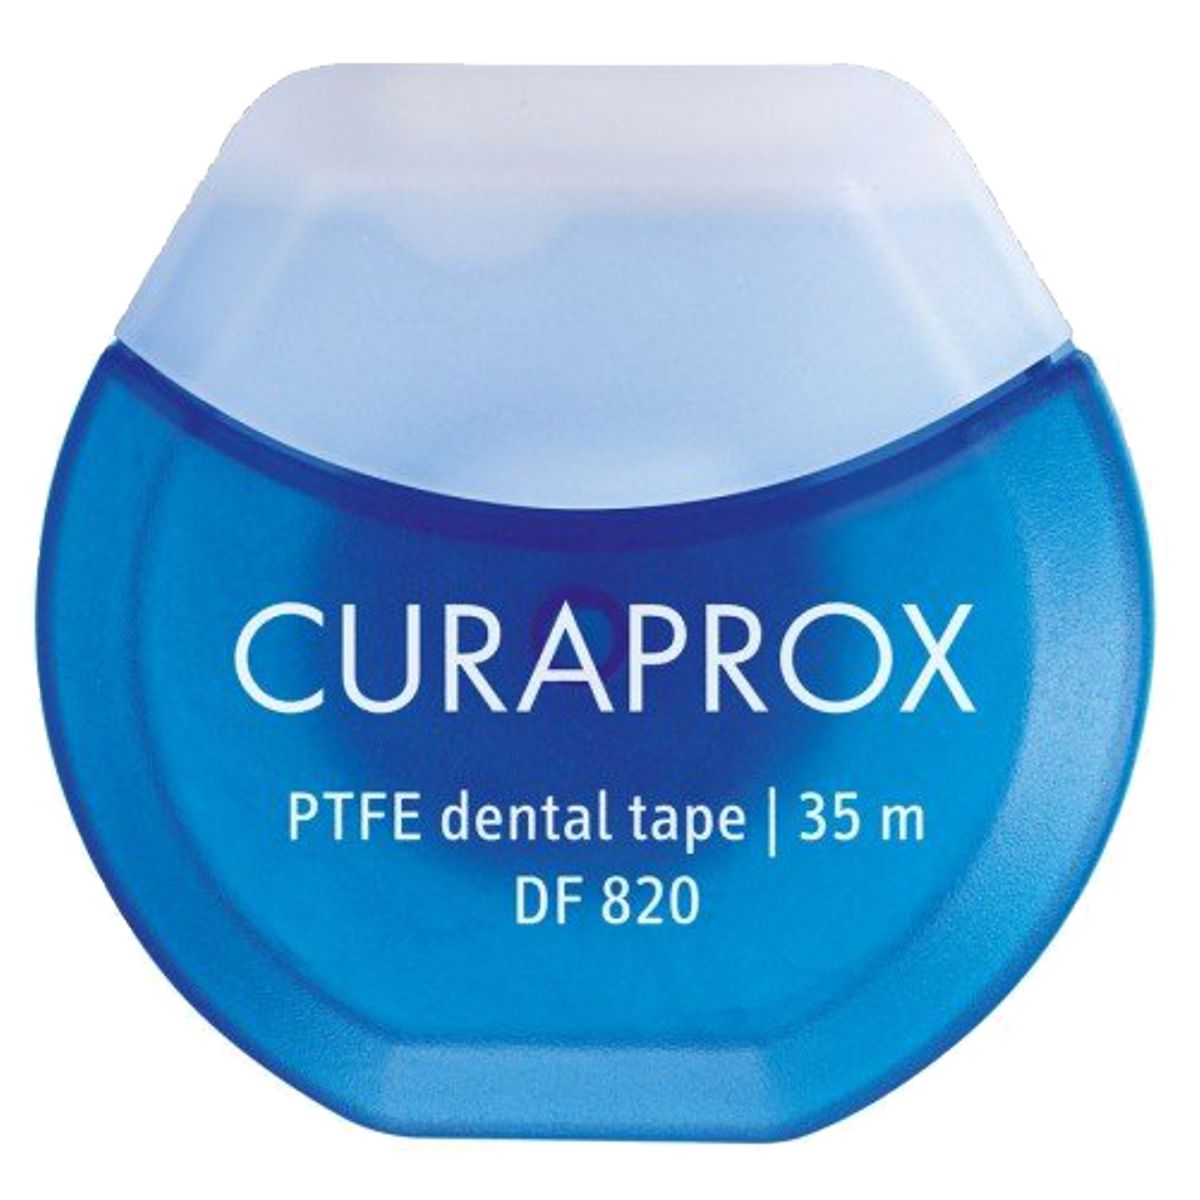 Curaprox_DF_820_PTFE_dental_tape_online_kaufen